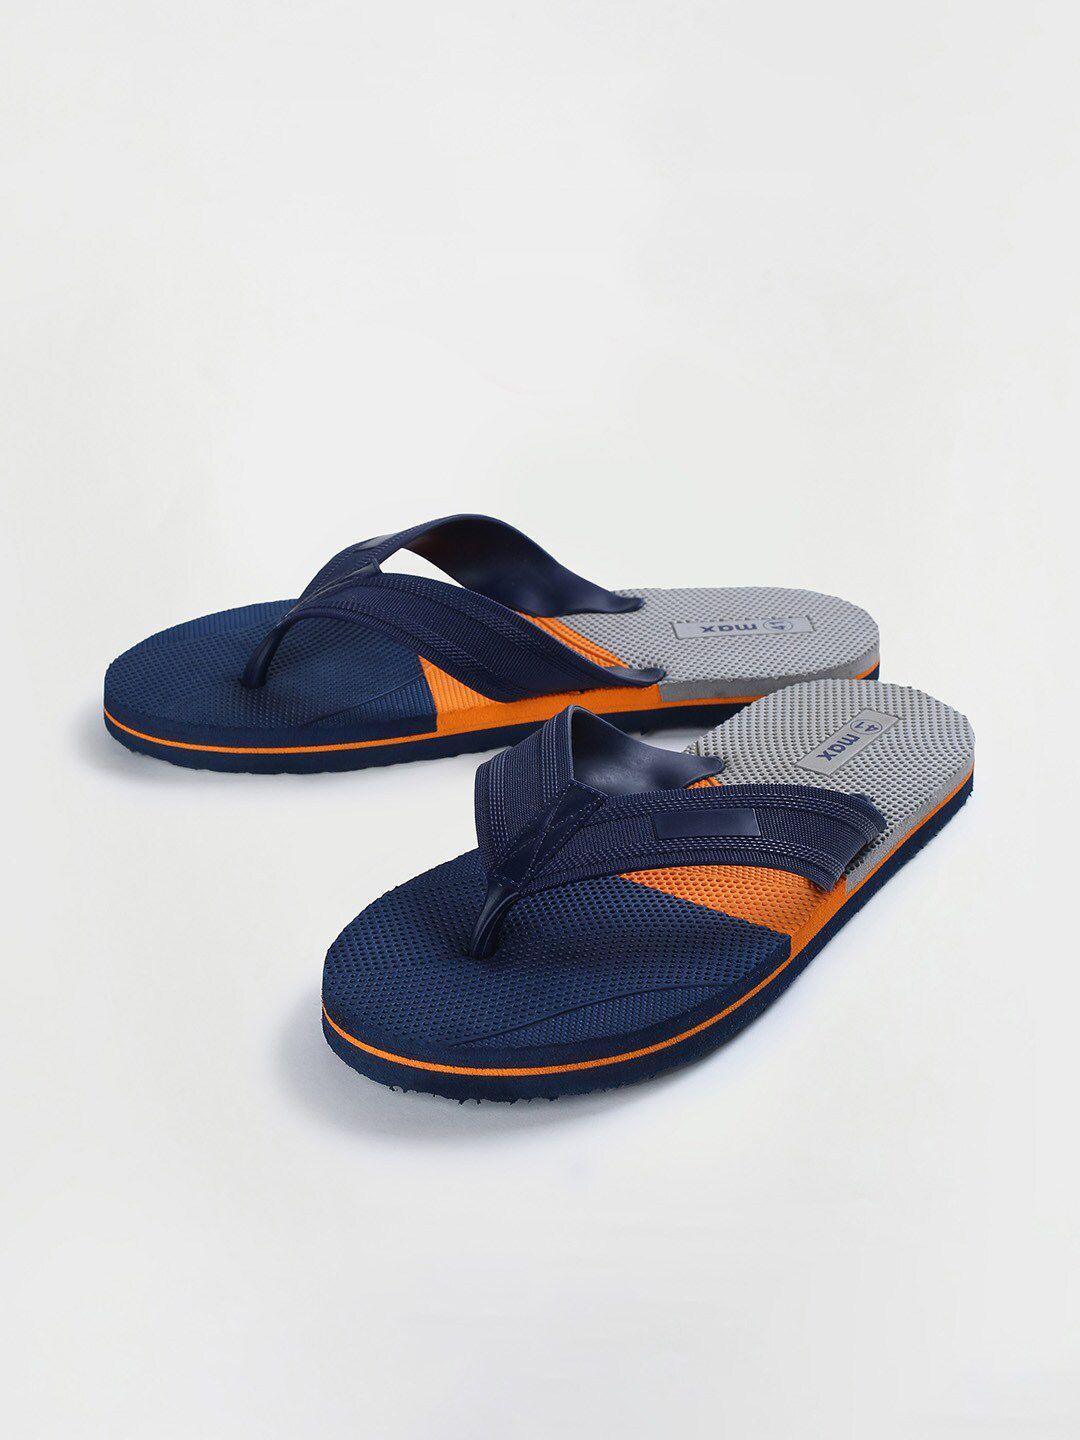 max-men-orange-&-blue-colourblocked-thong-flip-flops